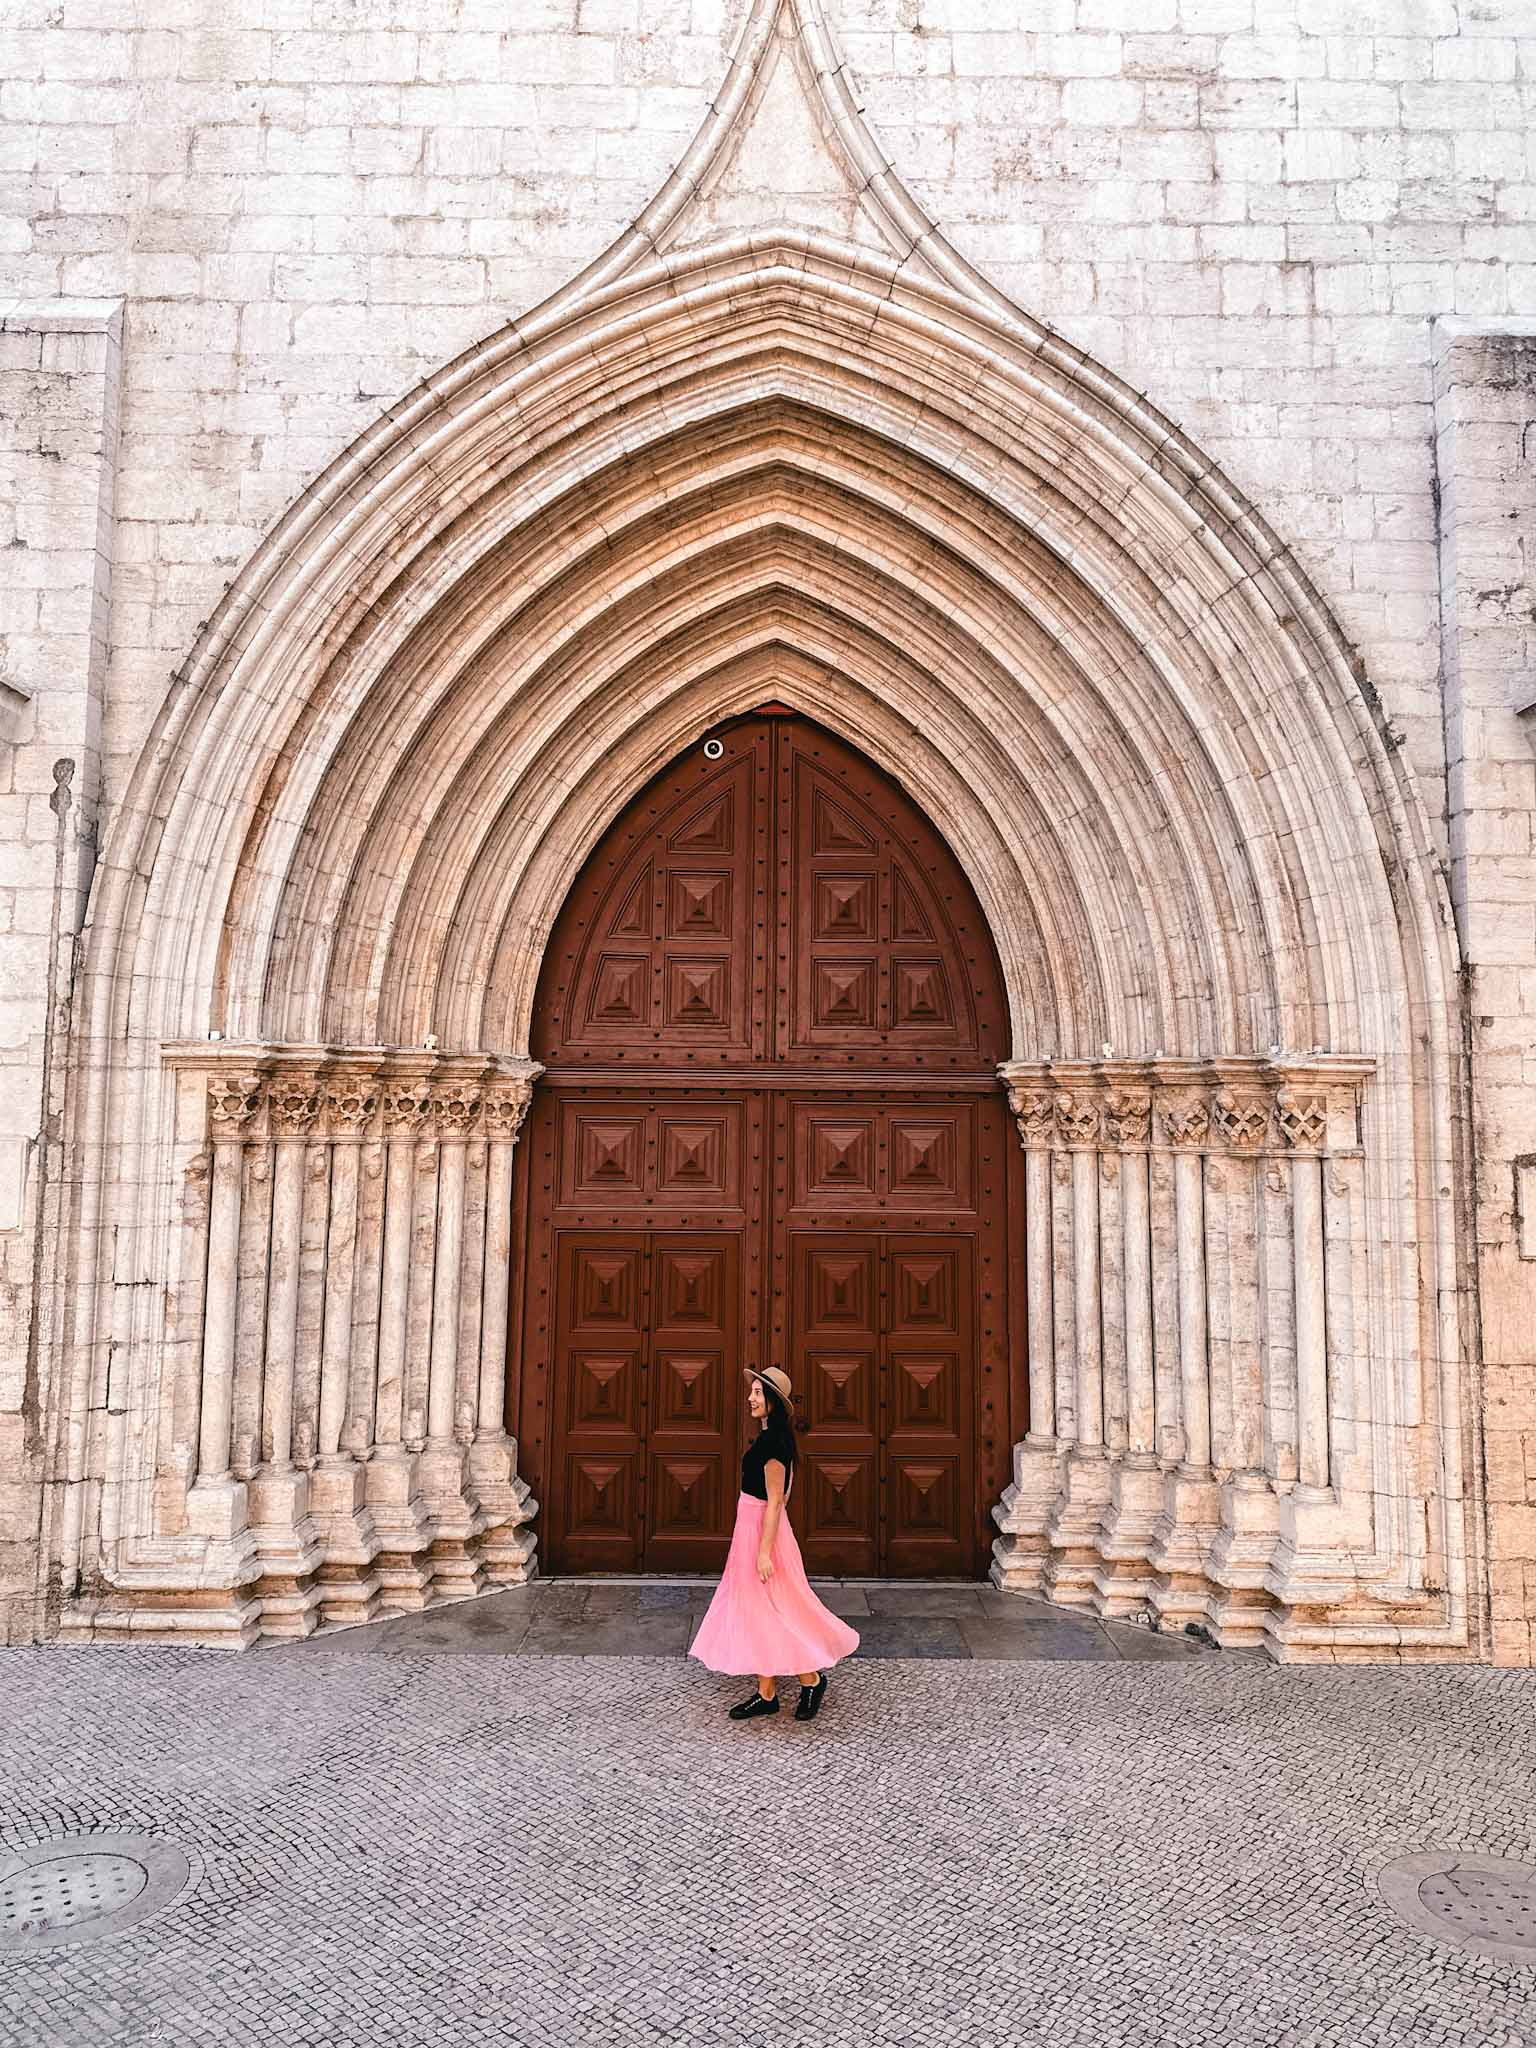 Best Instagram photo spots in Lisbon - Carmo Convent